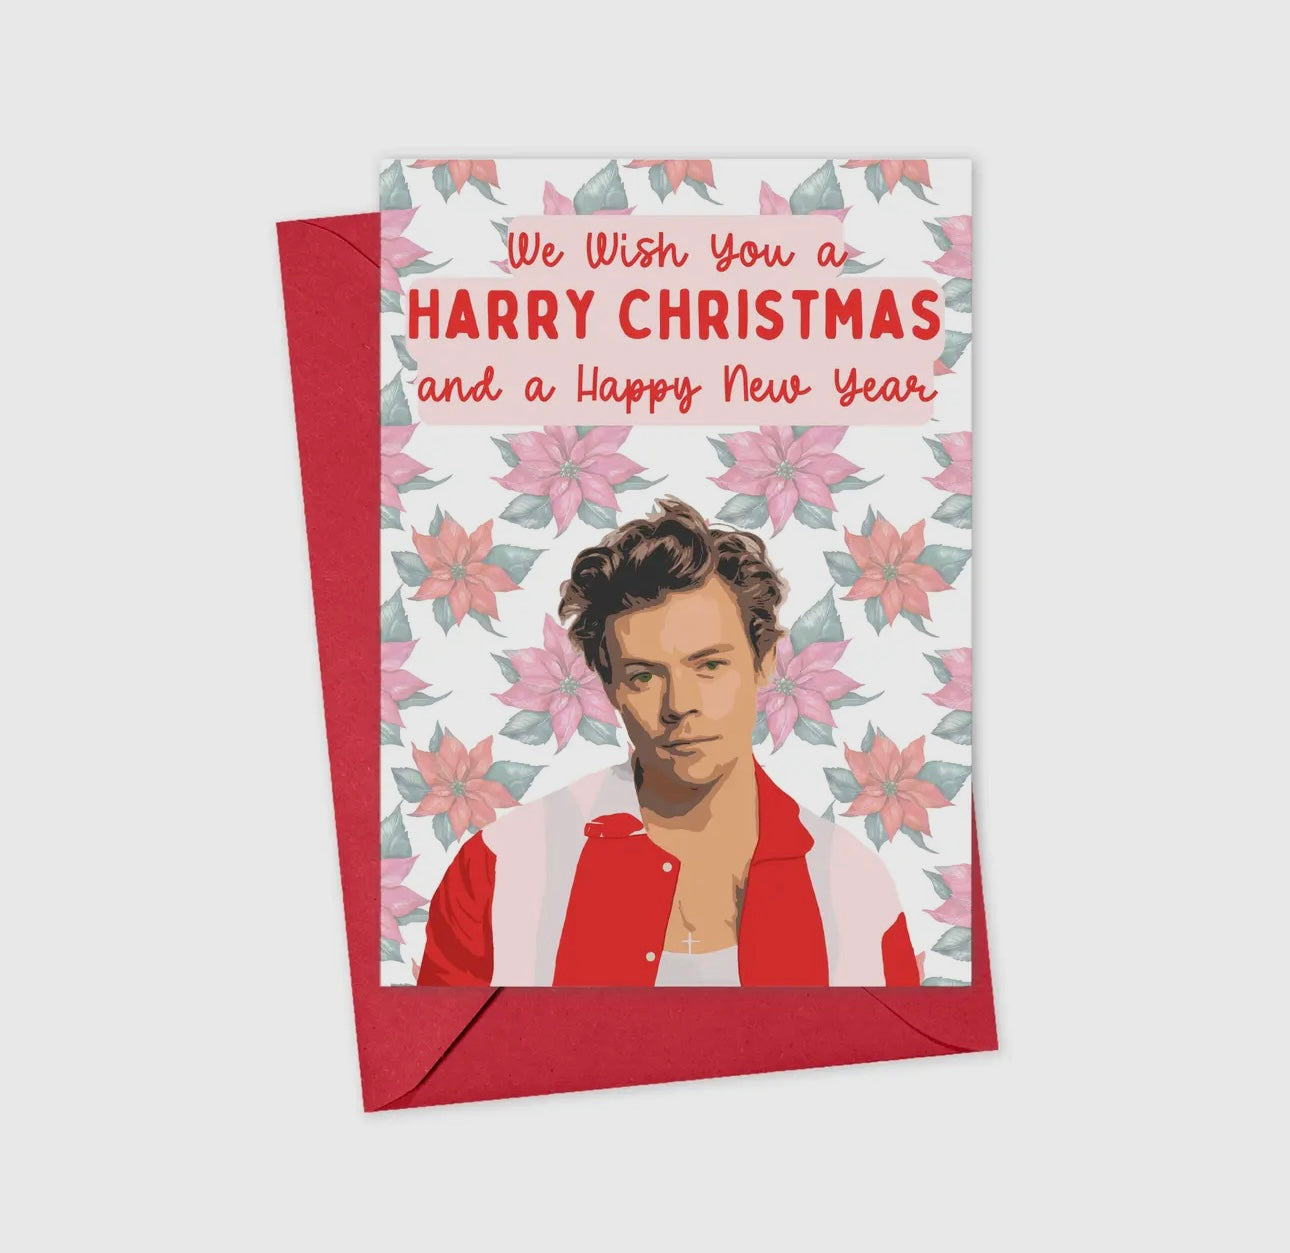 Wish You a Harry Christmas